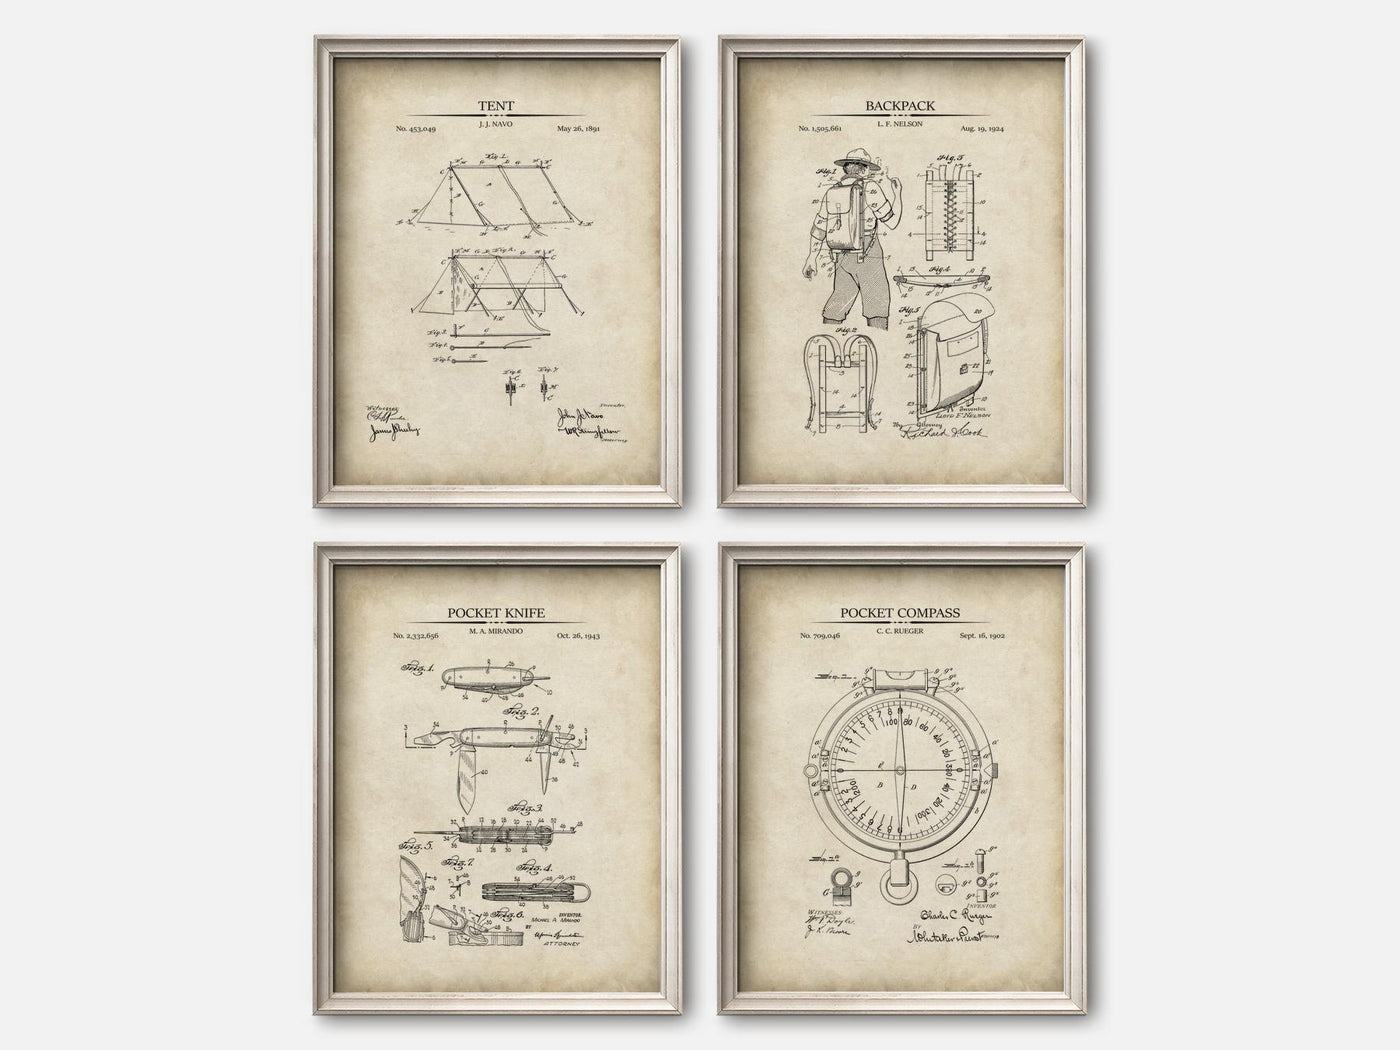 Camping Patent Print Set of 3 mockup - A_t10017-V1-PC_F+O-SS_4-PS_5x7-C_par variant